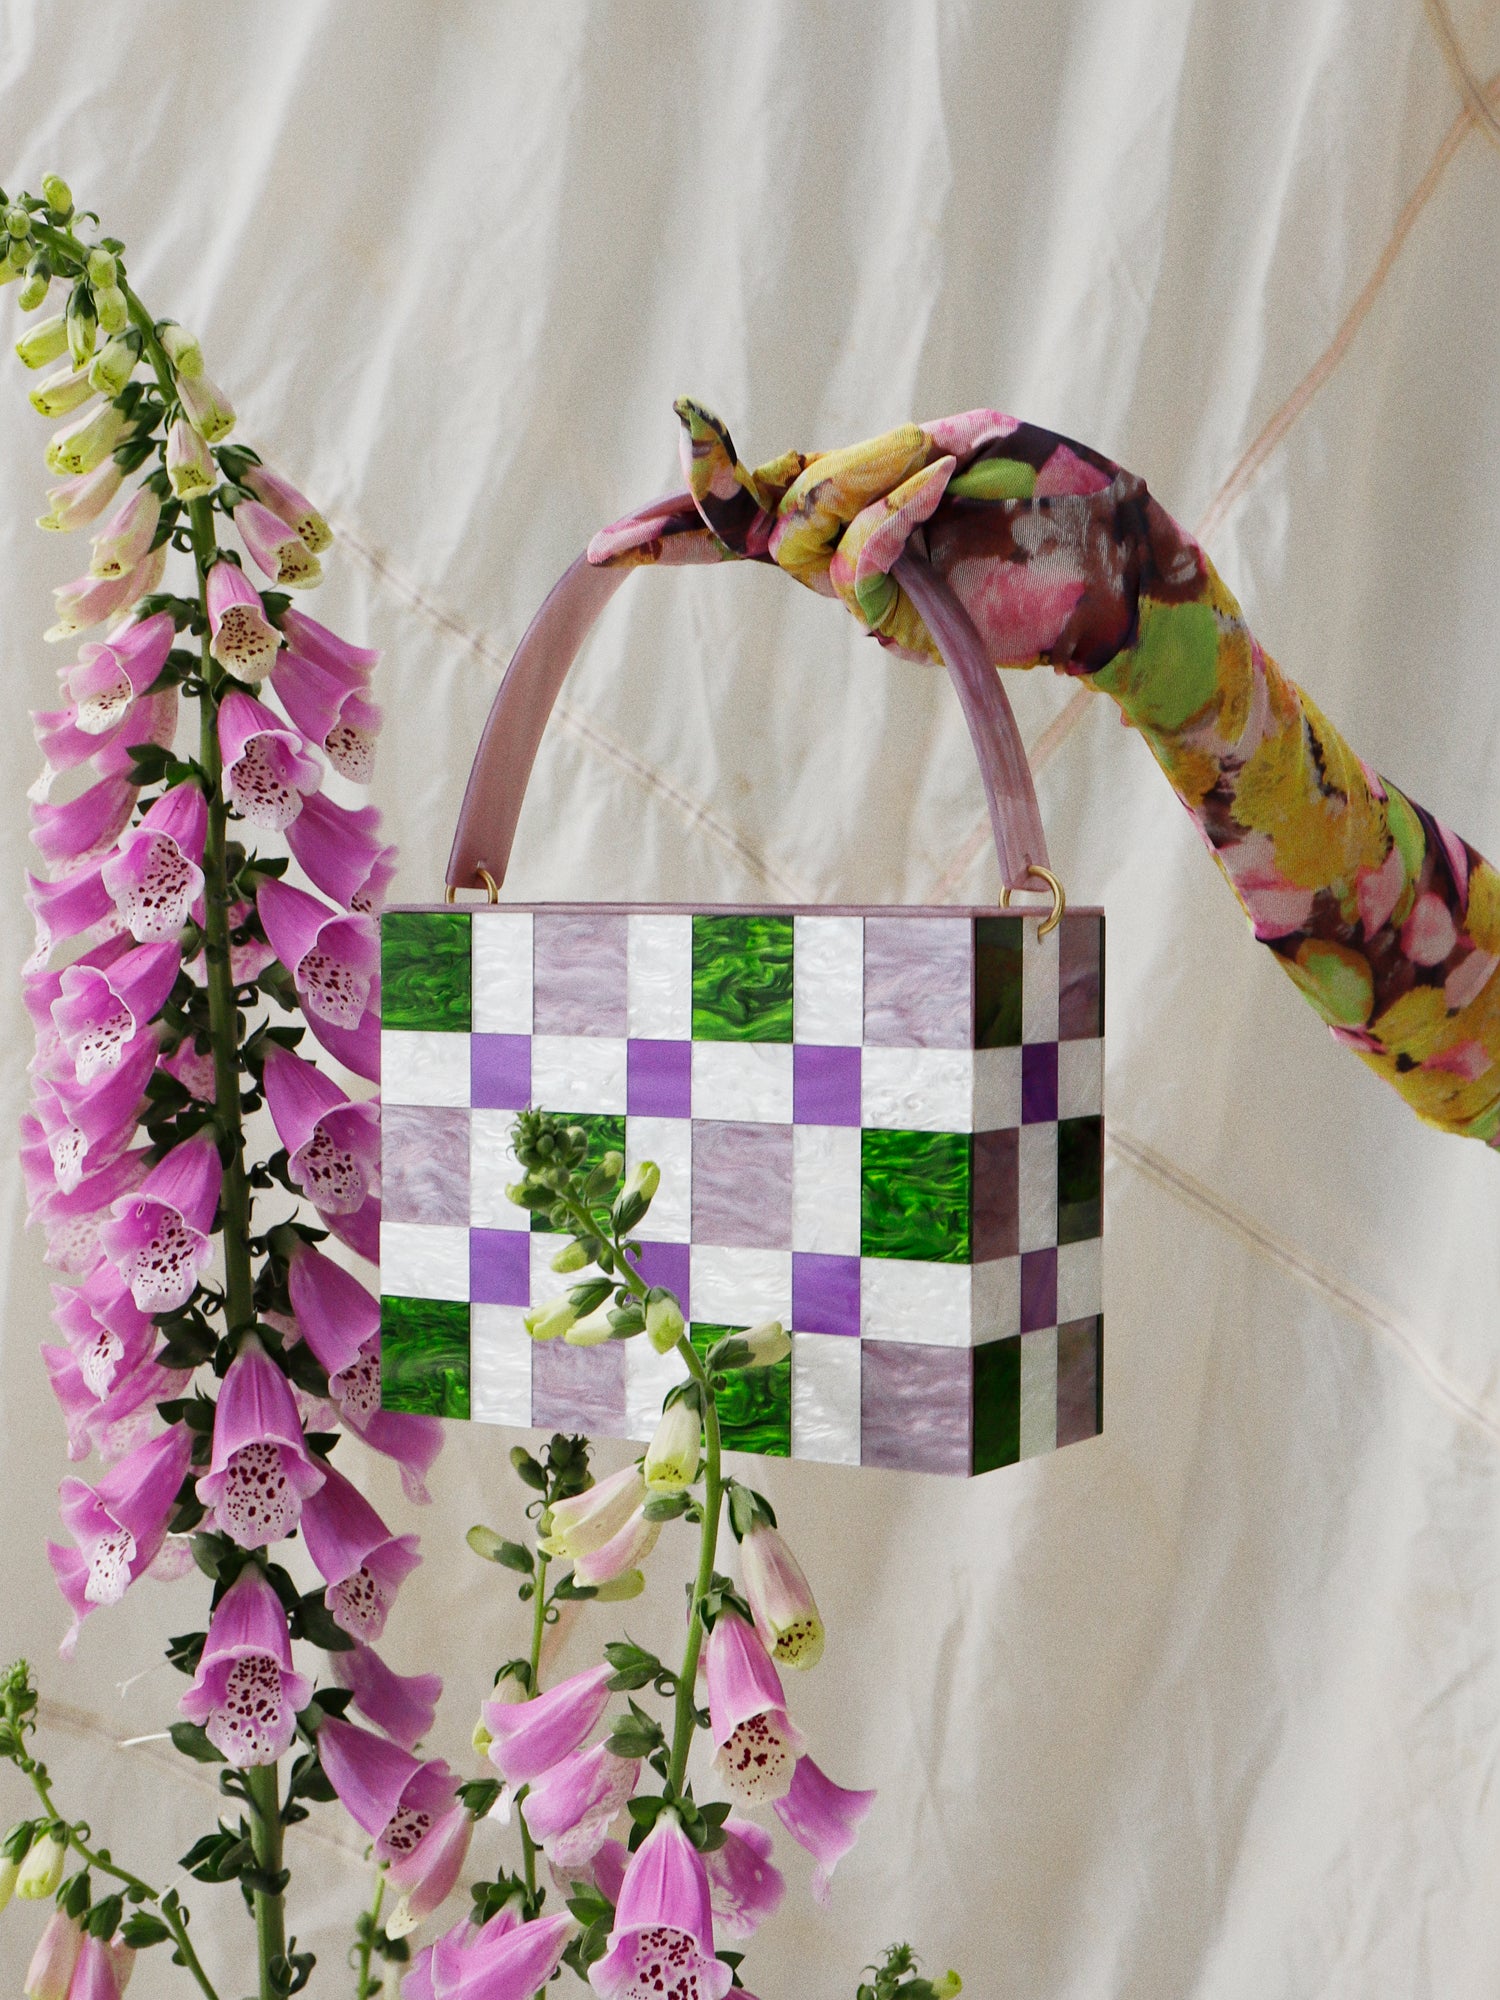 Picnic Bag in Lilac/Green